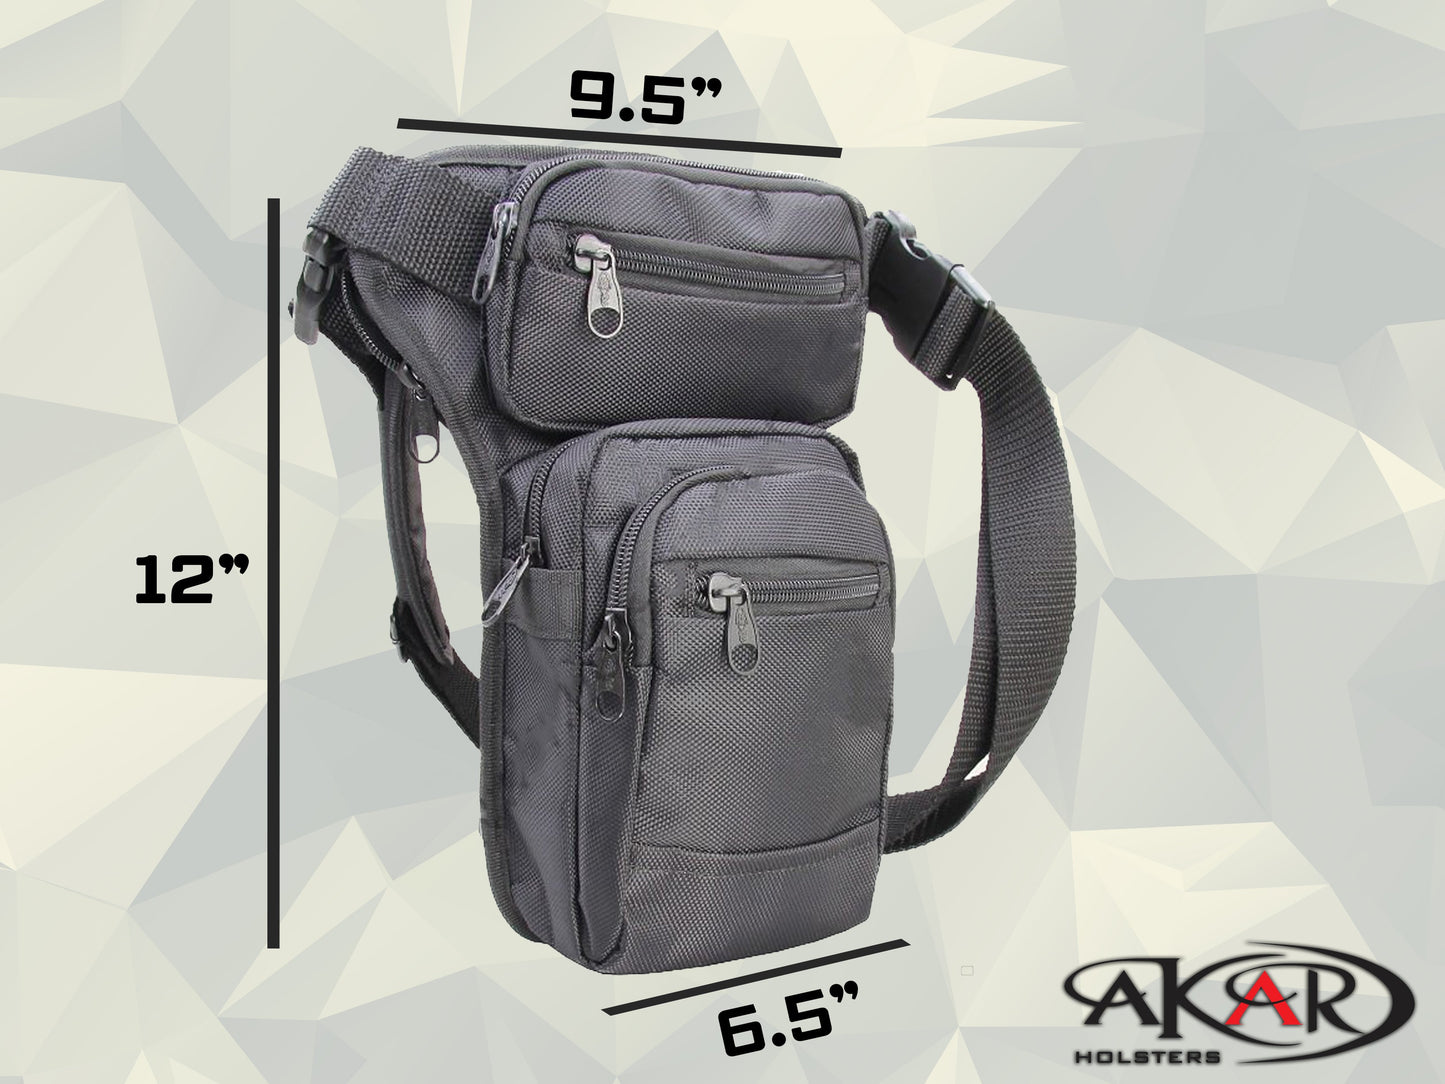 Any GLOCK W/STREAMLIGHT |  Leg Bag for Concealed Gun Carry - Multi-Purpose CCW EDC Waist Bag